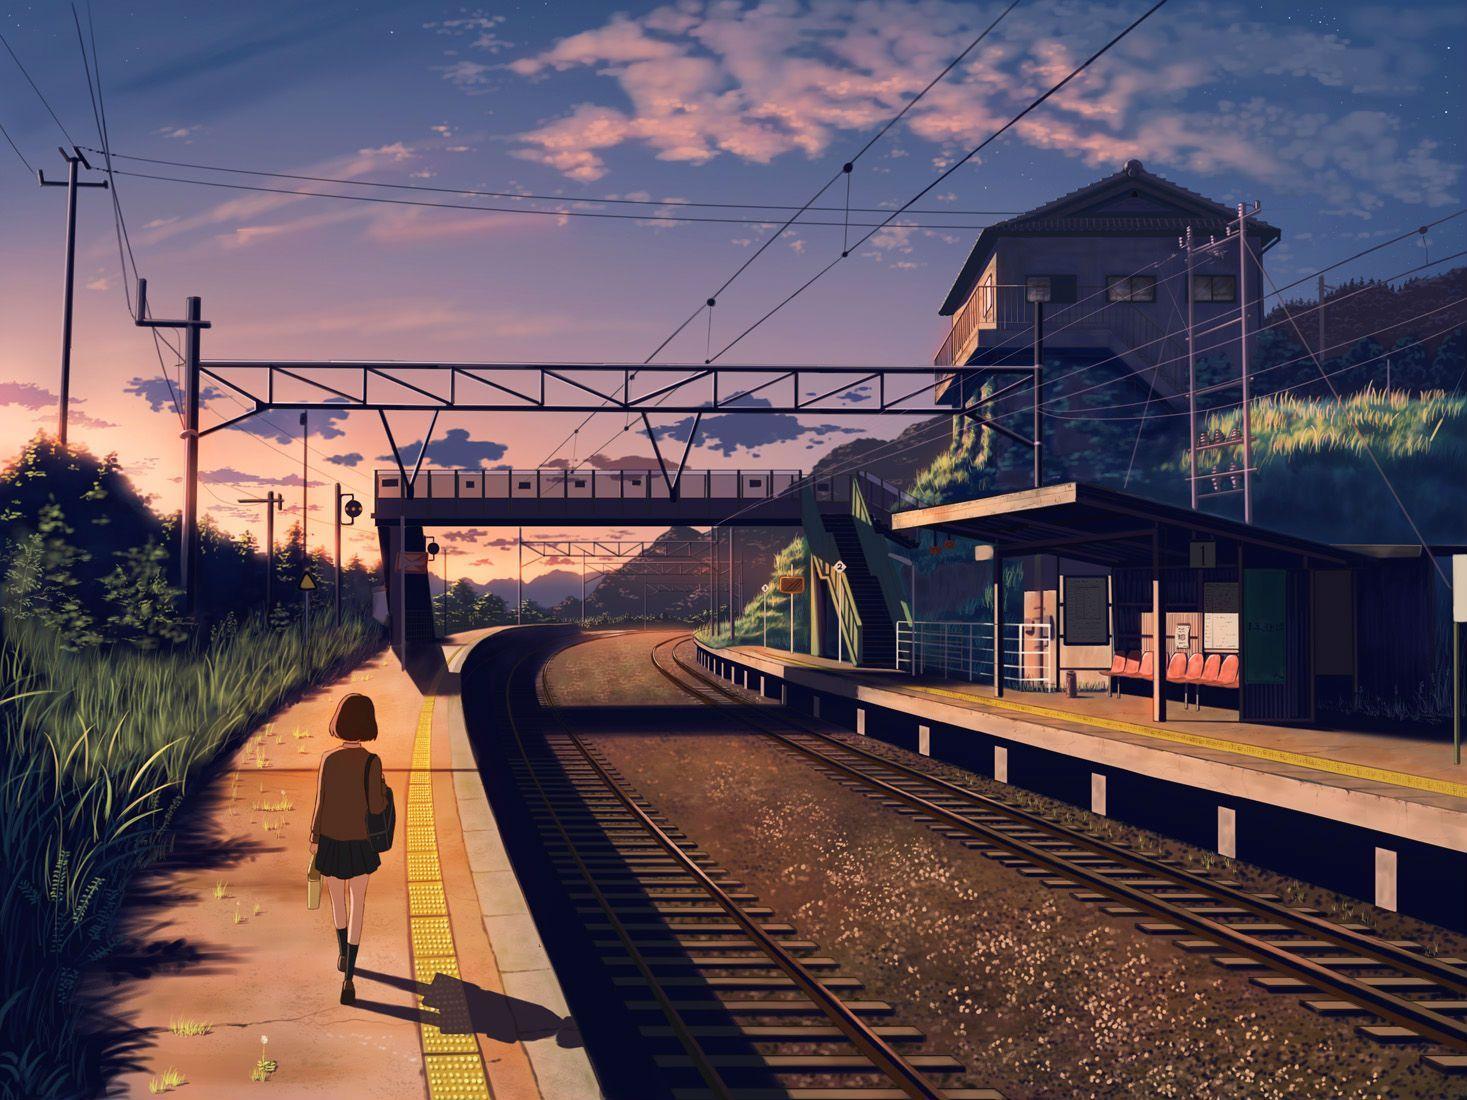 Anime Train Station wallpaper. Realistic_1. Anime